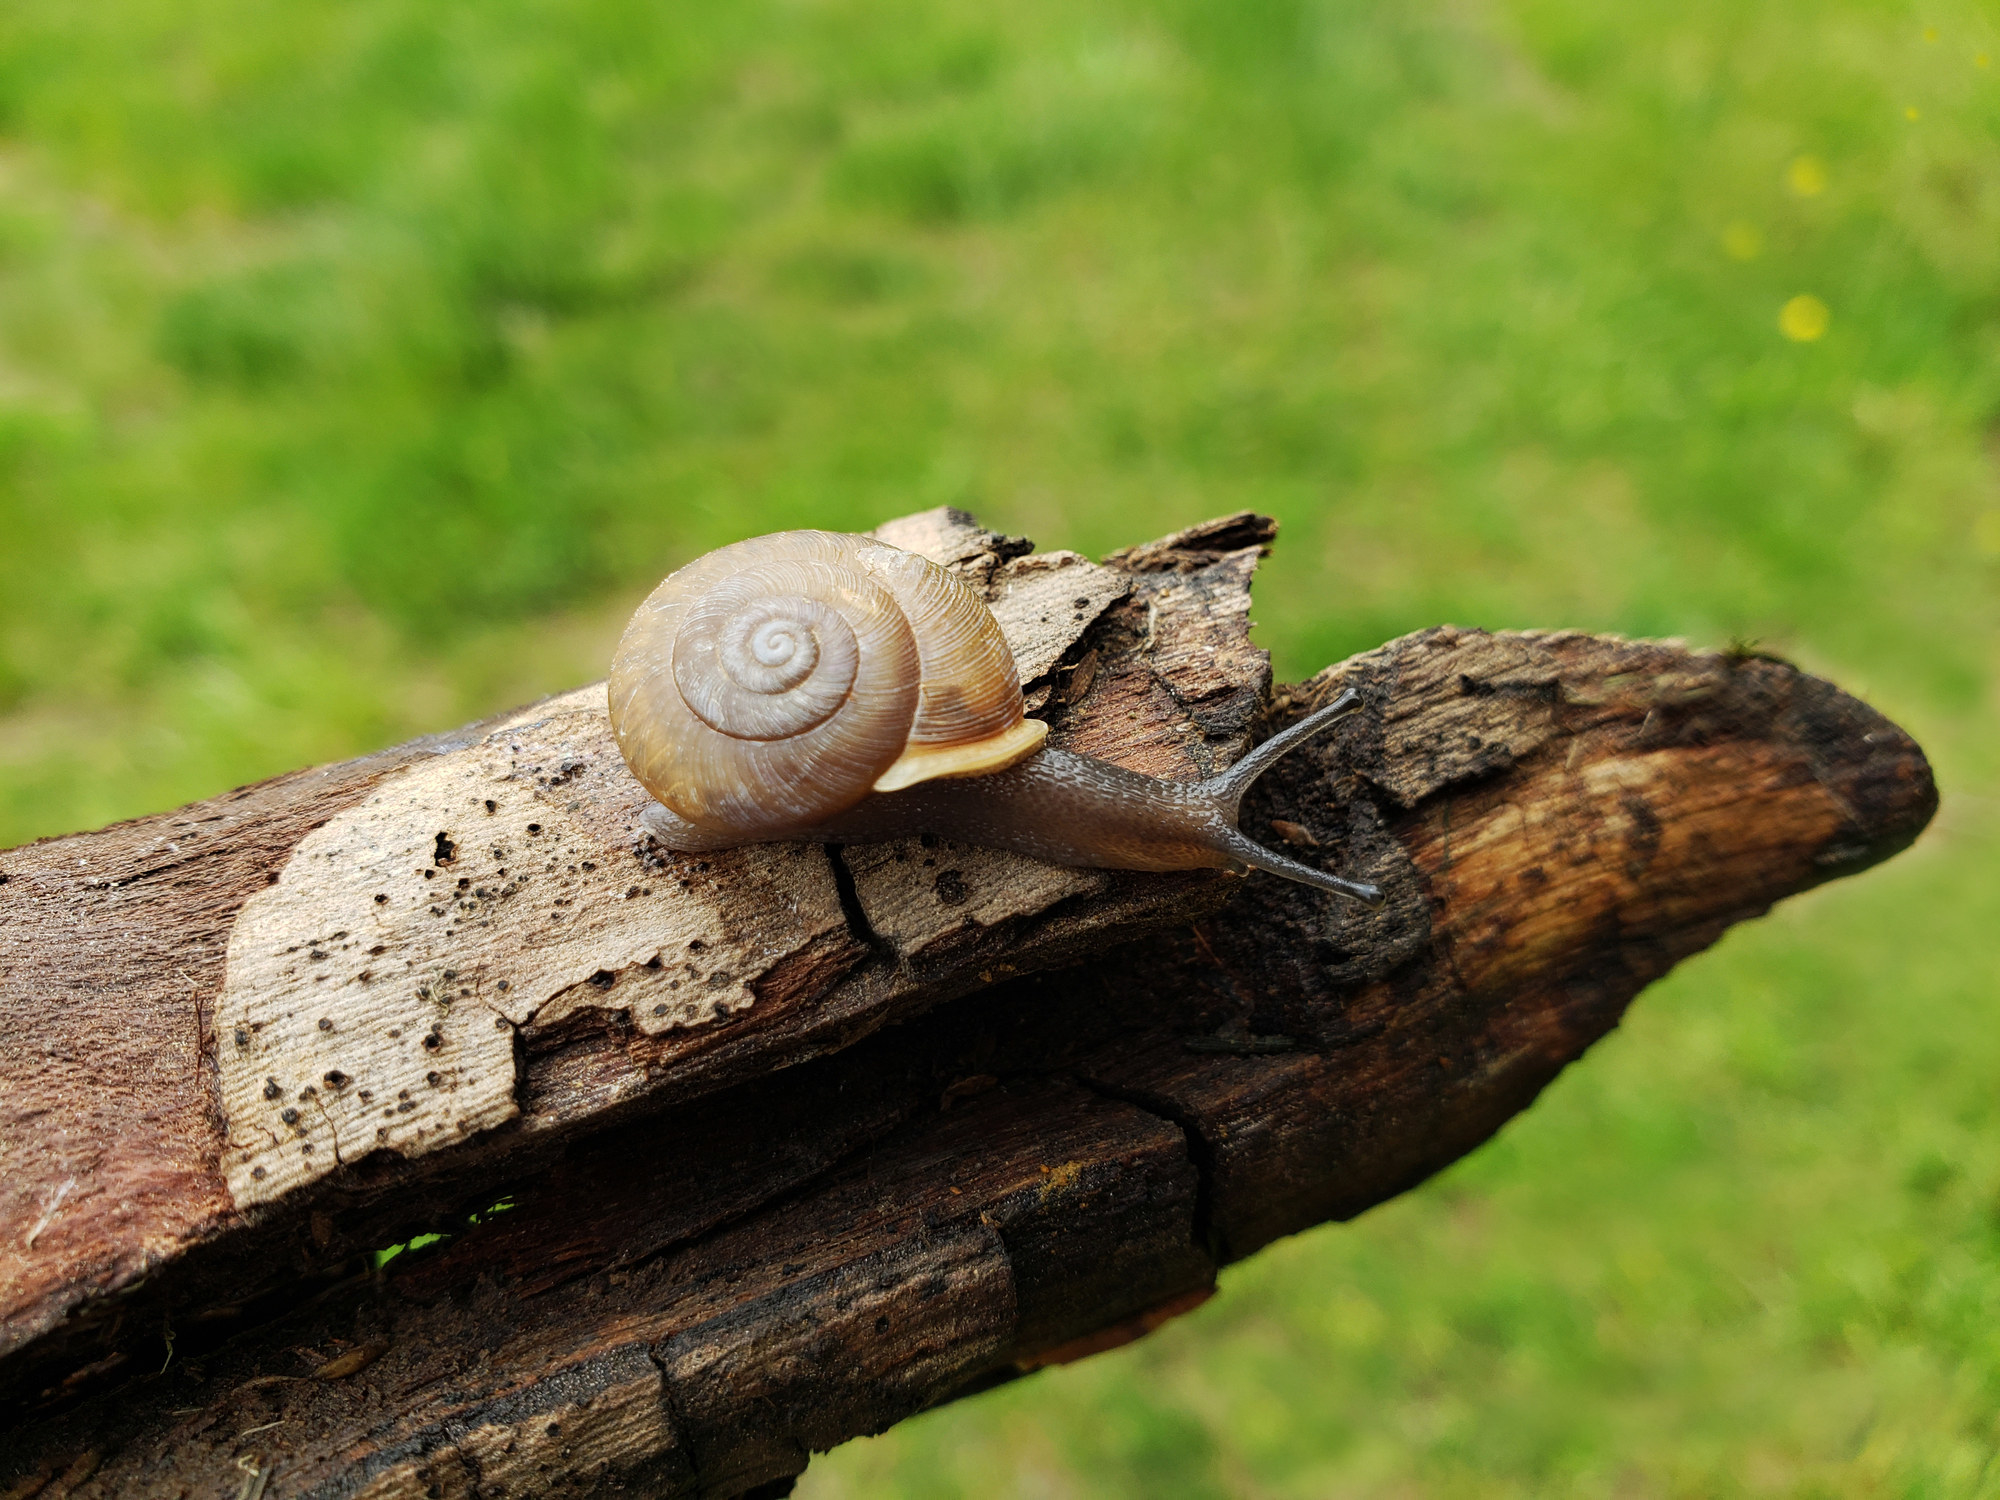 A snail on a log